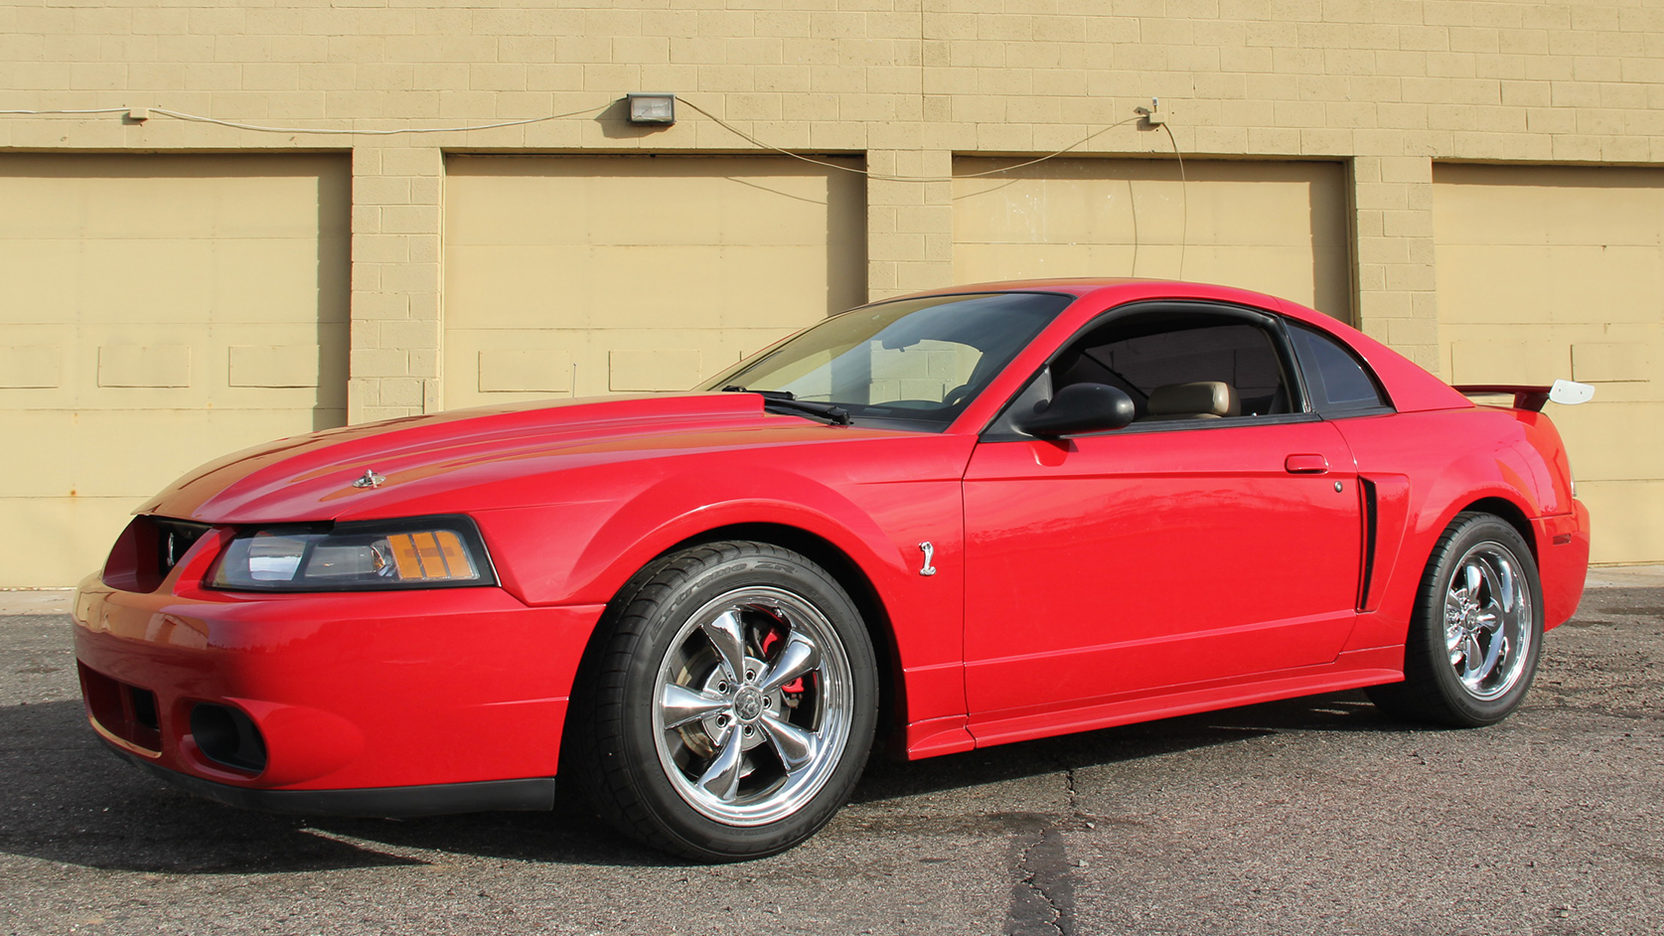 Red 1999 Mustang SVT Cobra in front of garage